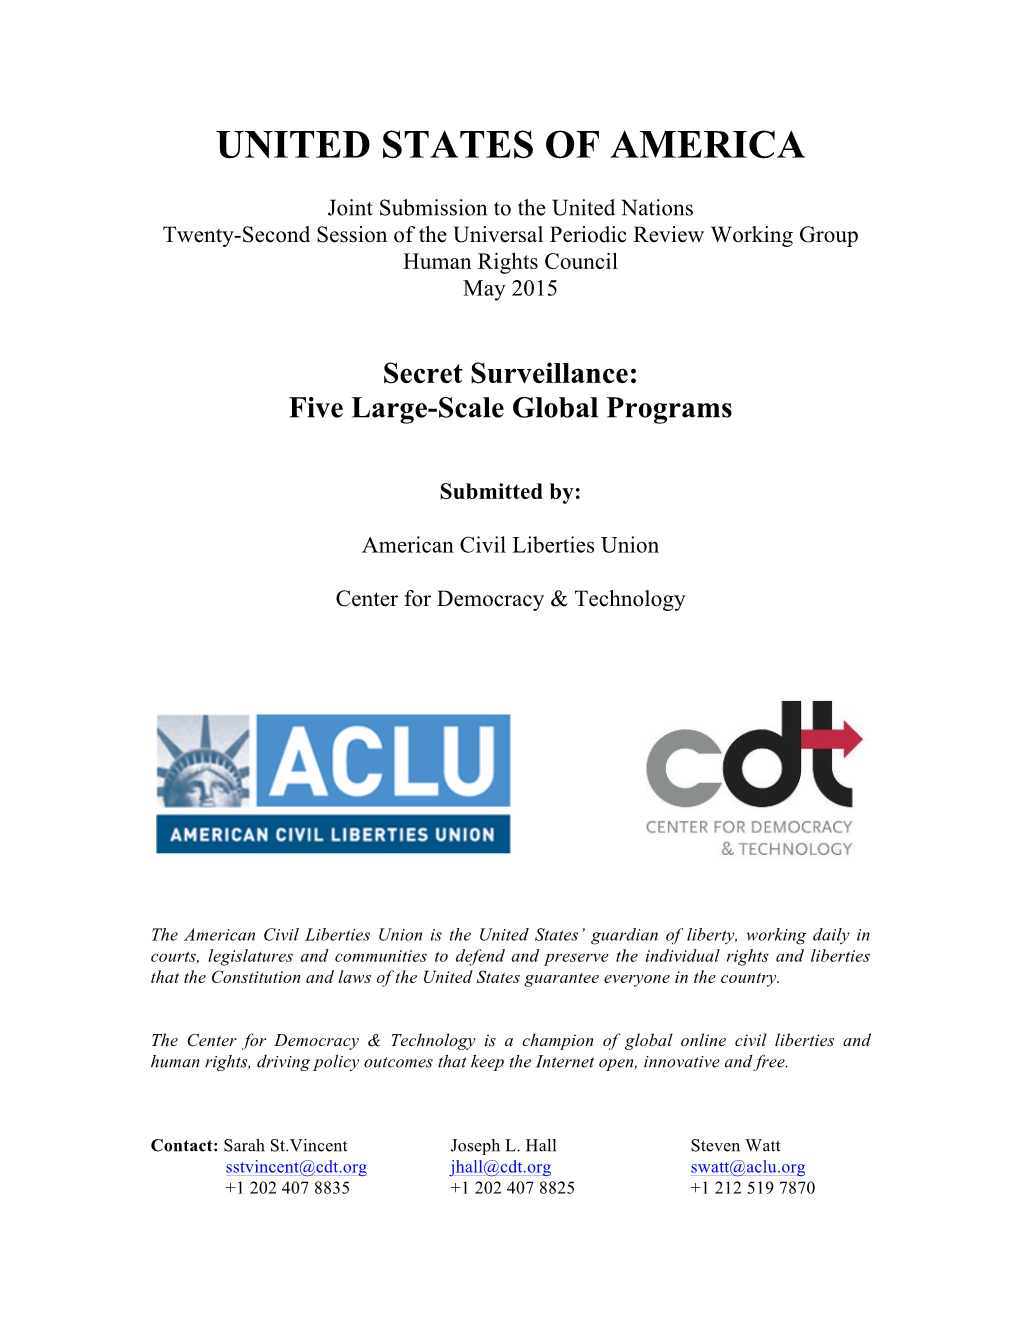 CDT ACLU UPR Sub FINAL